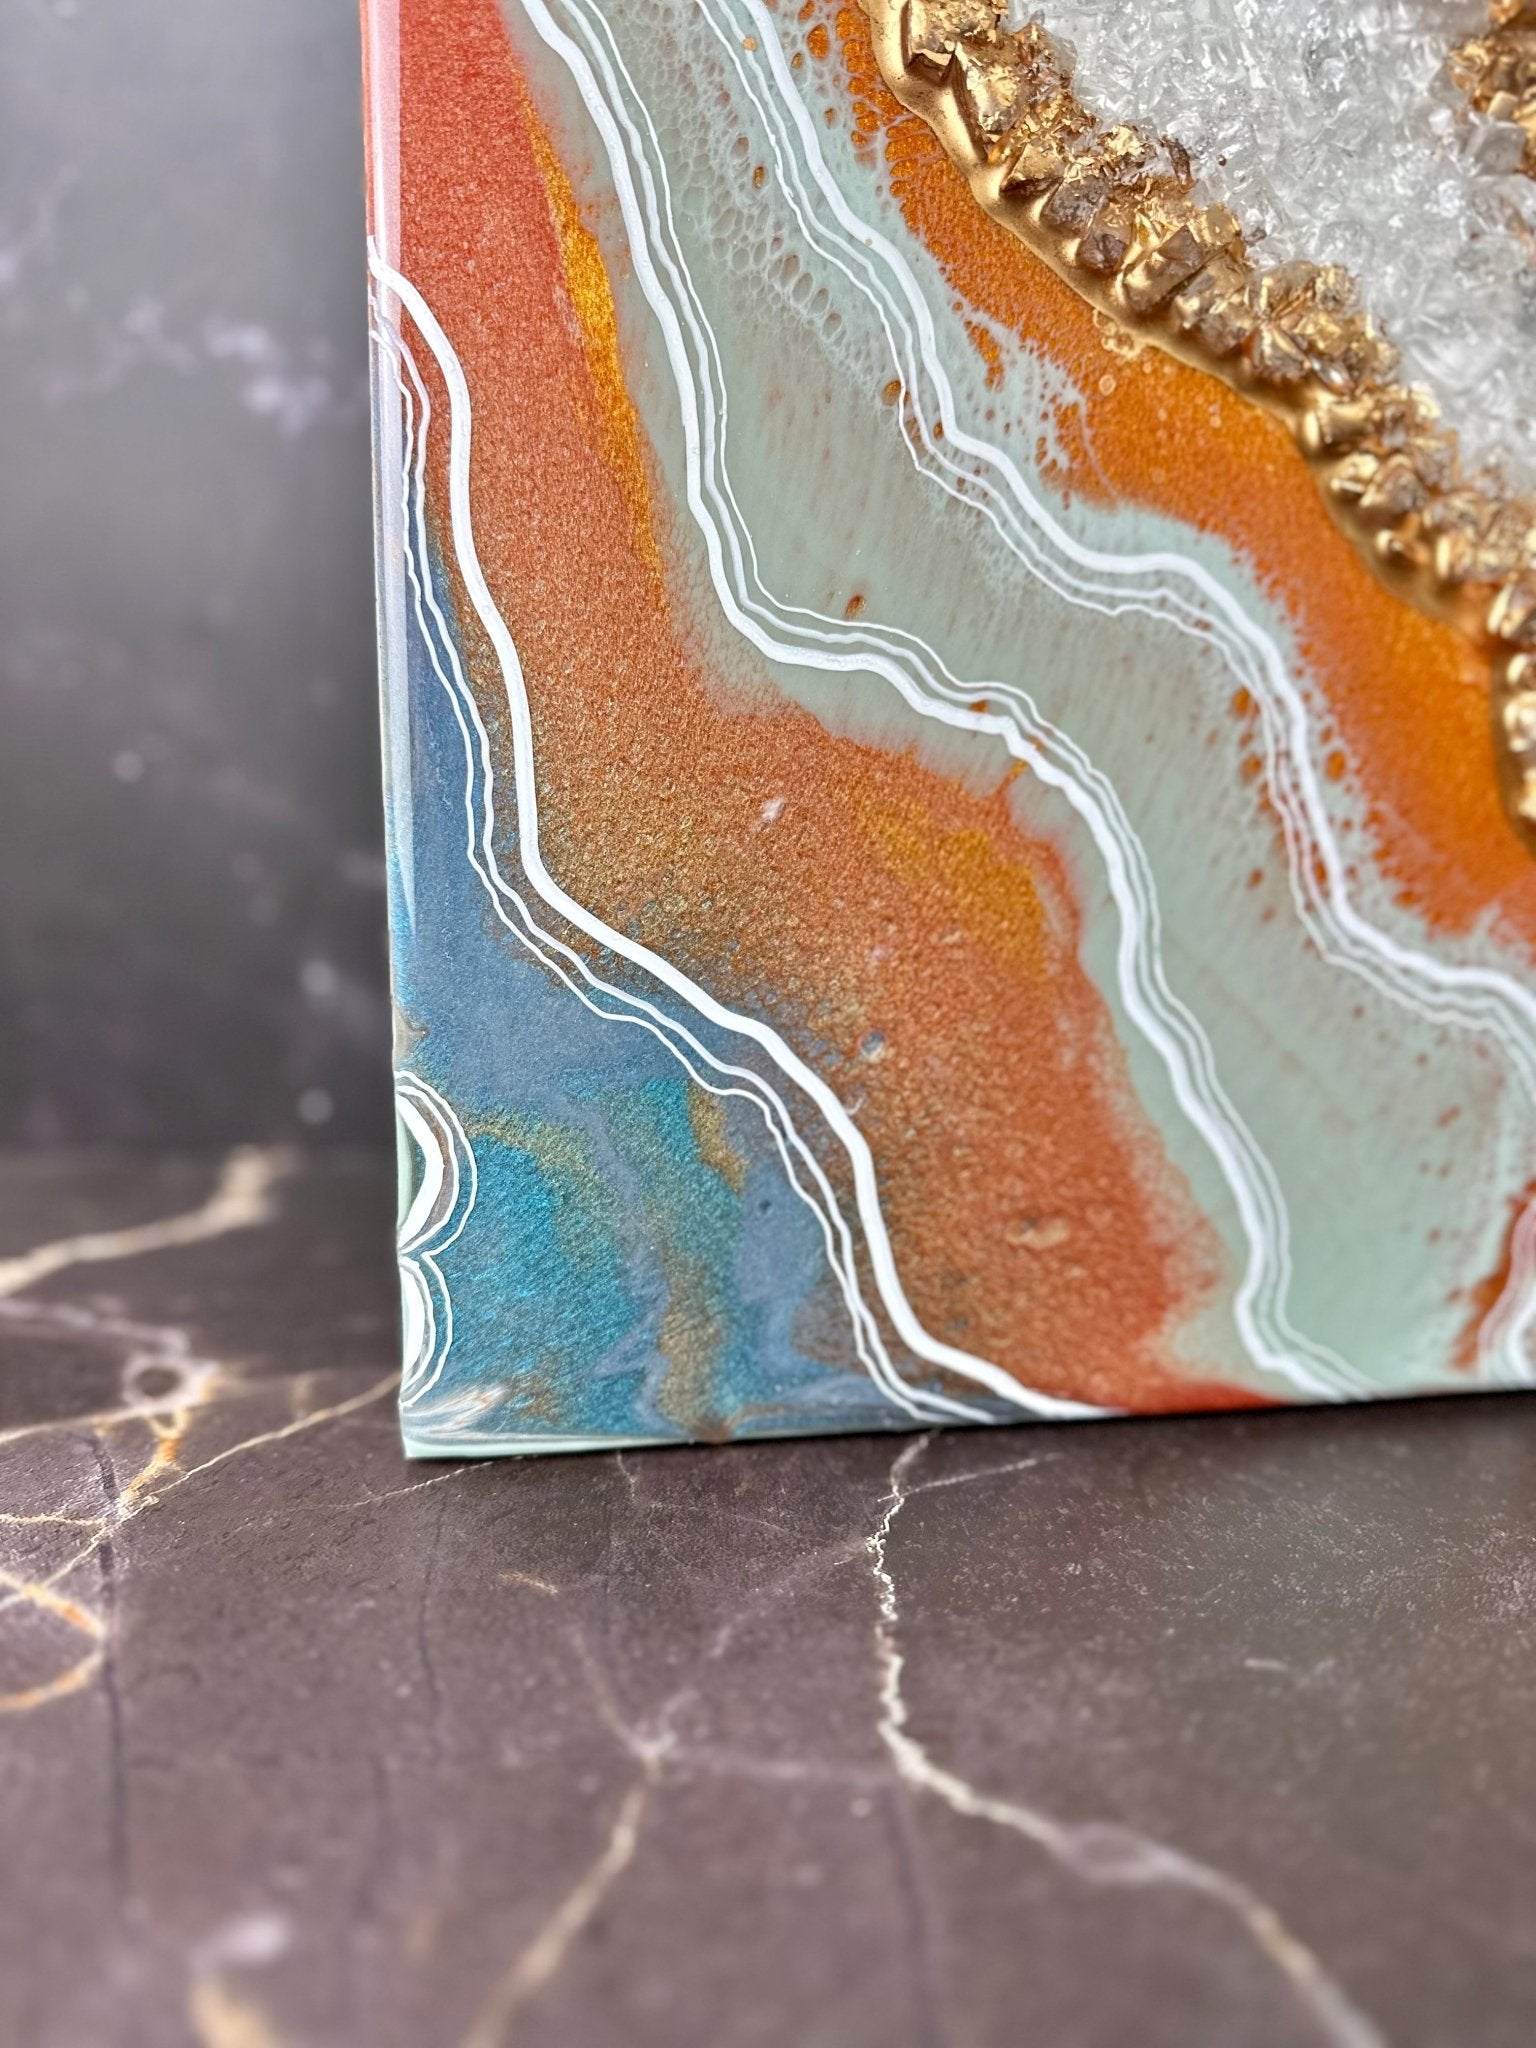 Geode in Orange + Blue - Bragg About It Artistry